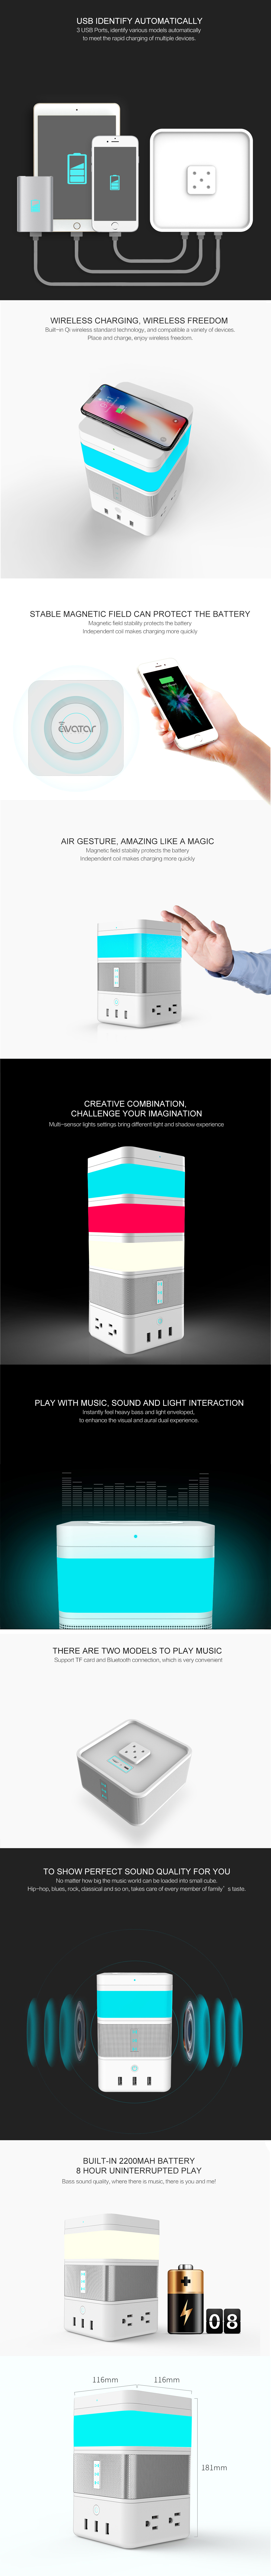 FreeCube-Smart-Modular-DIY-Kit-with-bluetooth-Speaker-LED-Gesture-Sensor-Light-Wireless-Charger-Powe-1859086-2